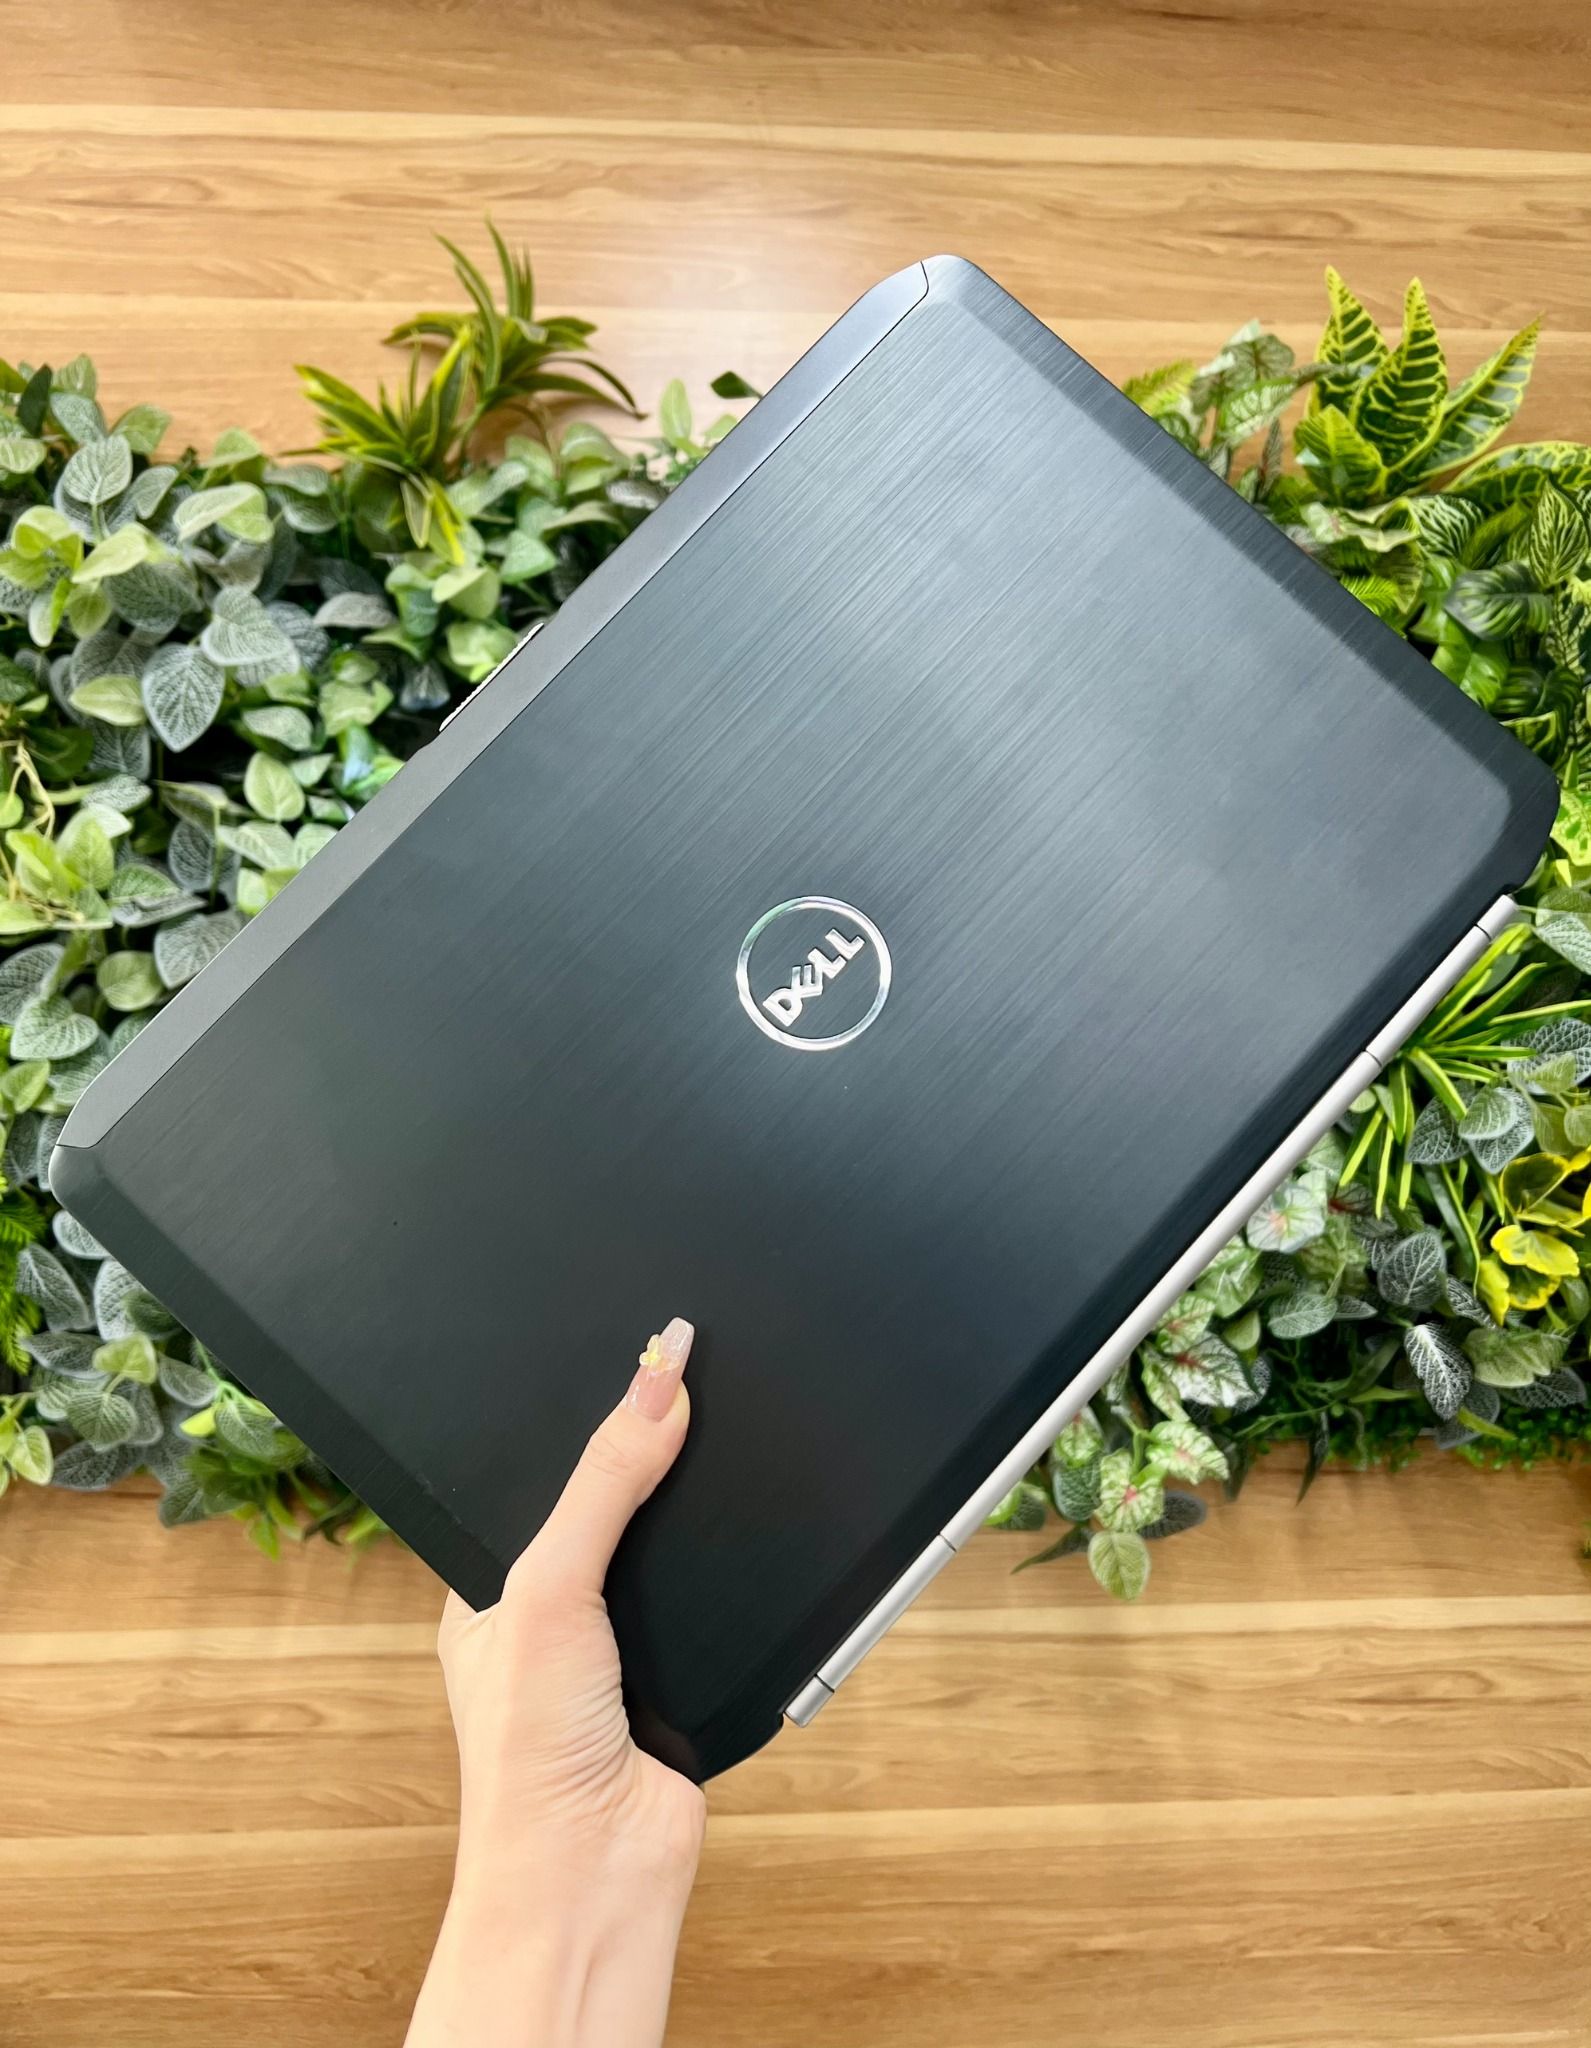 Dell Latitude E5430 Notebook – TS102Laptop